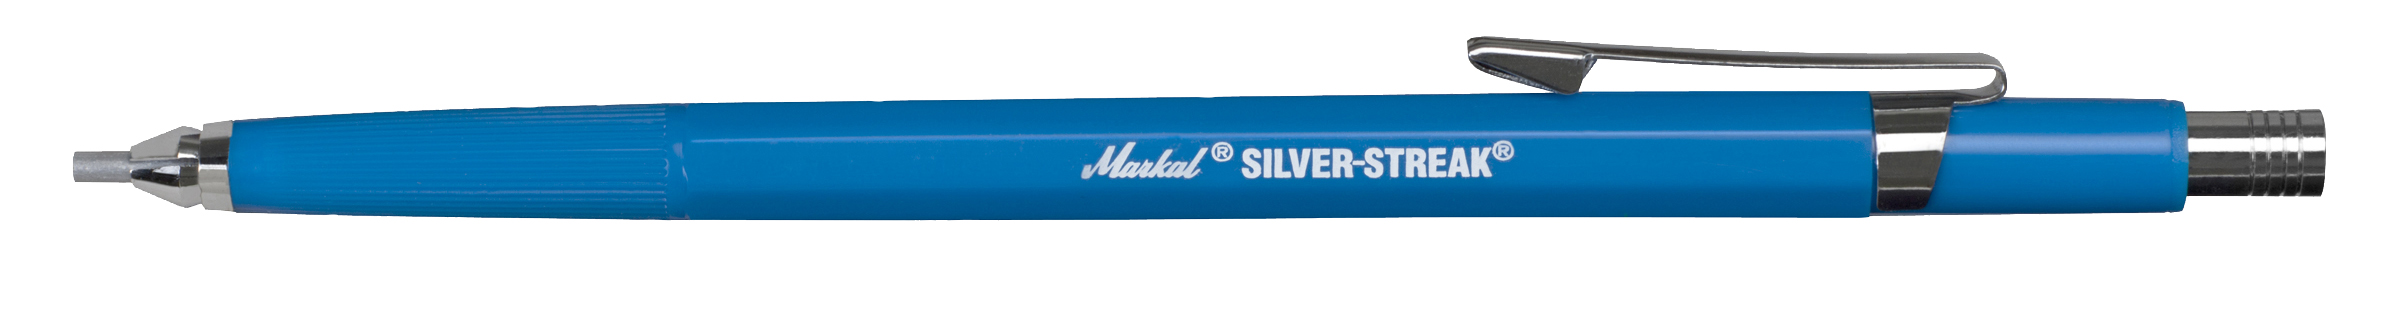 Marker, Silver-Streak round includes